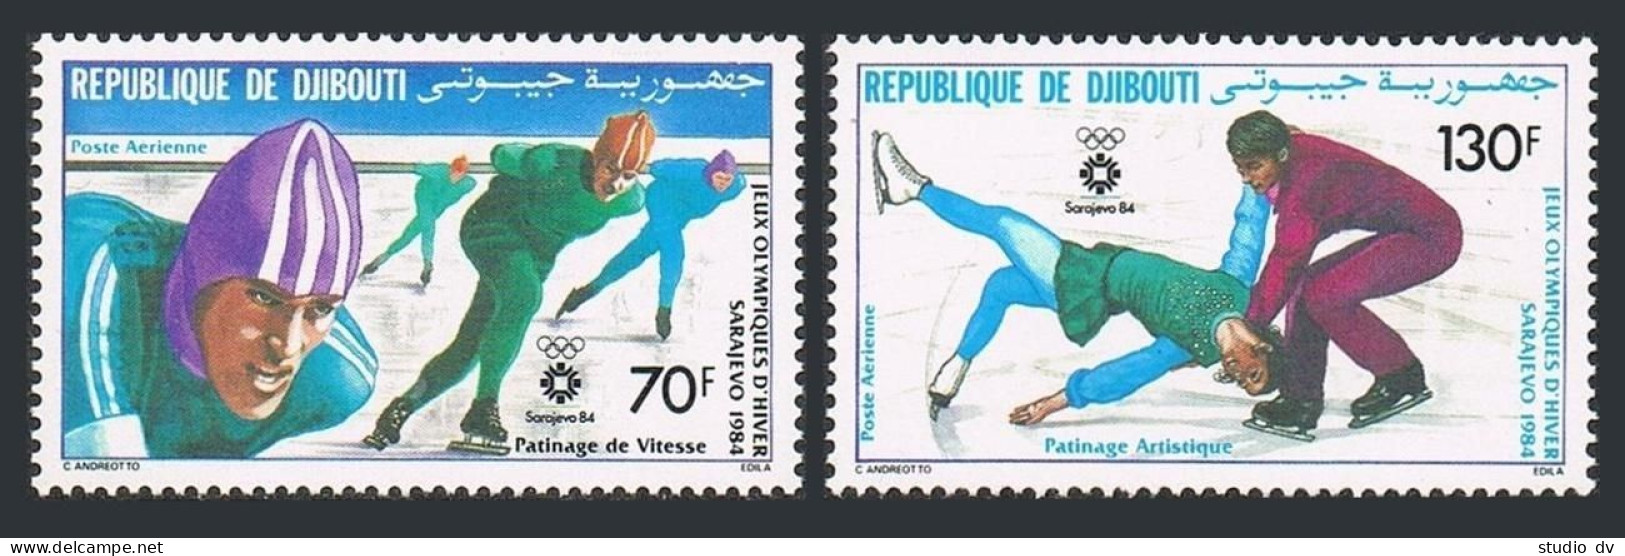 Djibouti C190-C191, MNH. Michel 392-393. Olympics Sarajevo-1984. Skating. - Dschibuti (1977-...)